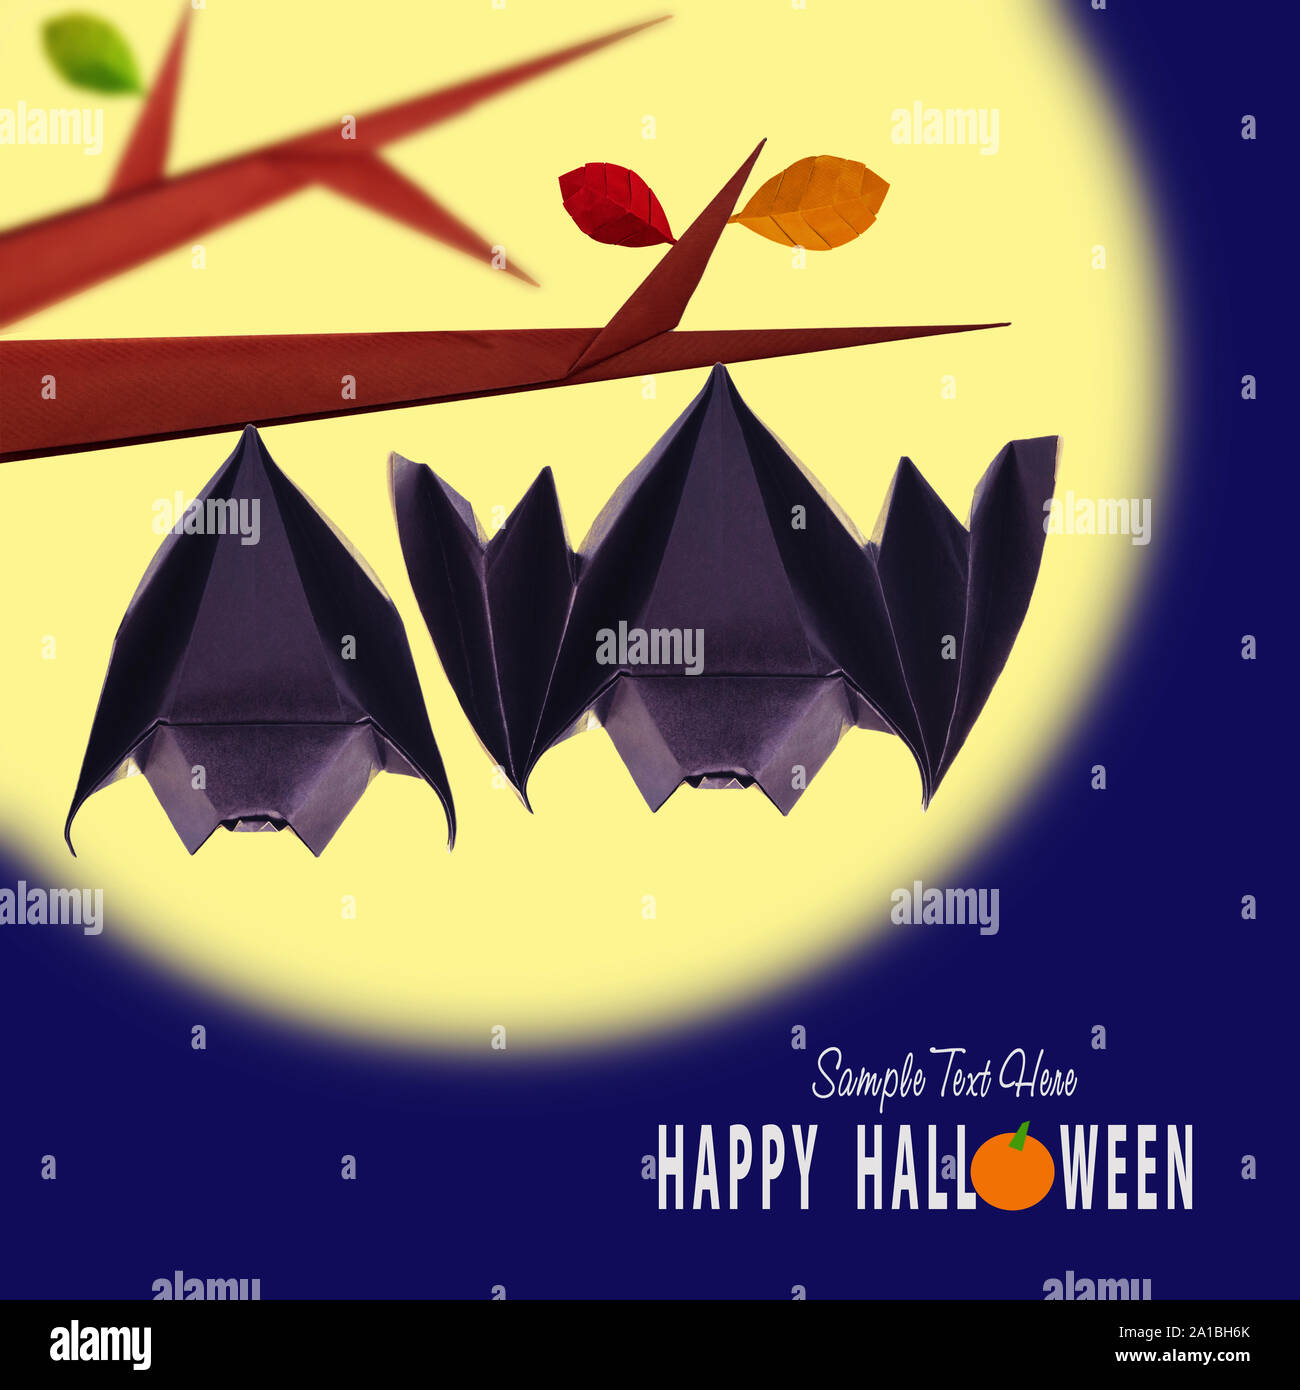 Origami hanging bats Stock Photo